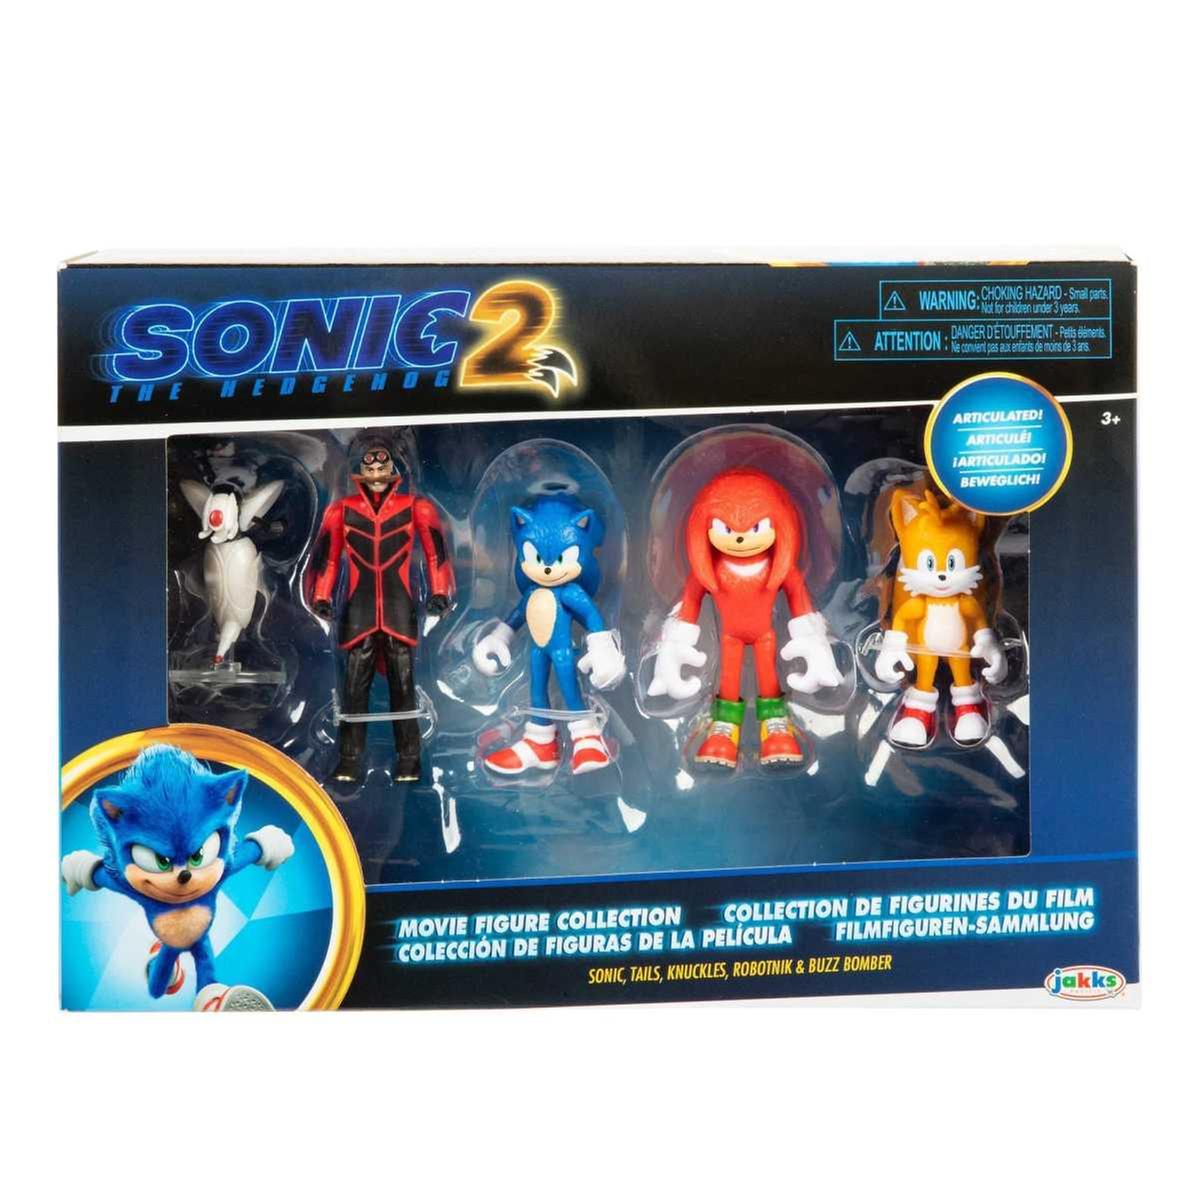 Sonic the Hedgehog - Pack de 5 figuras Sonic: Sonic, Tails, Knuckles,  Robotnik y Buzz Bomber 6 cm ㅤ | Misc Action Figures | Toys"R"Us España